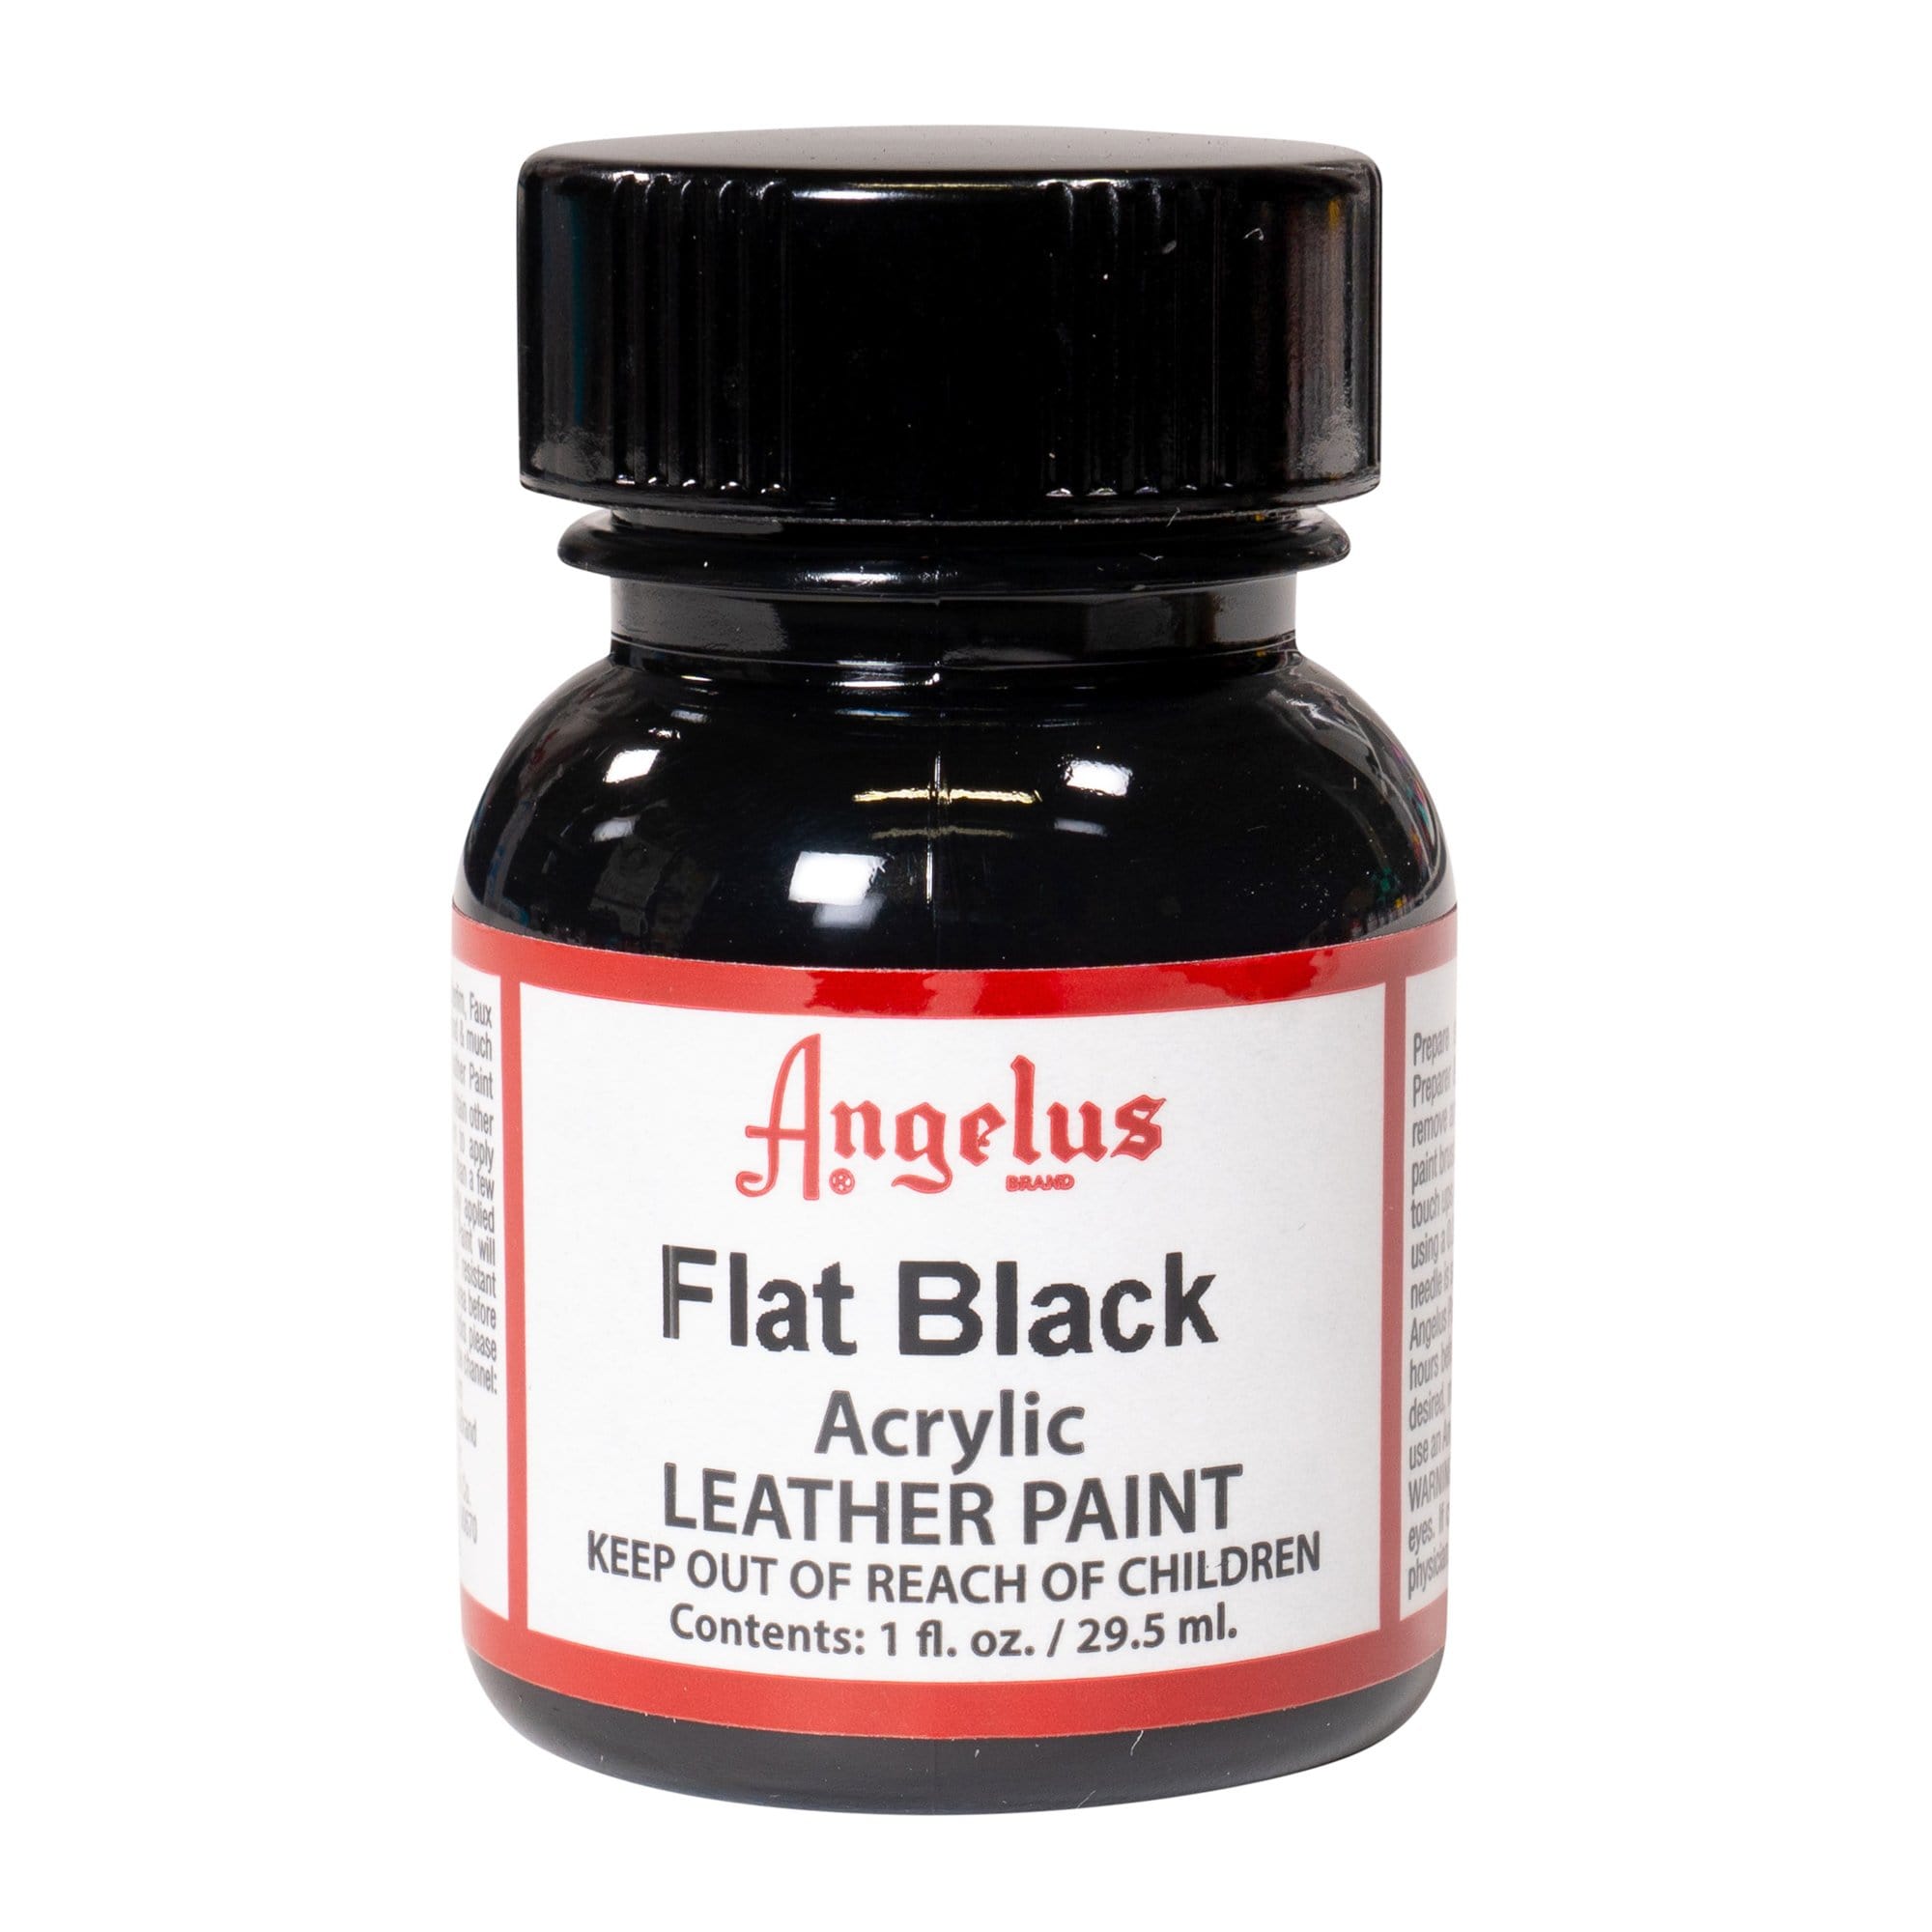 Angelus Flat Black Paint